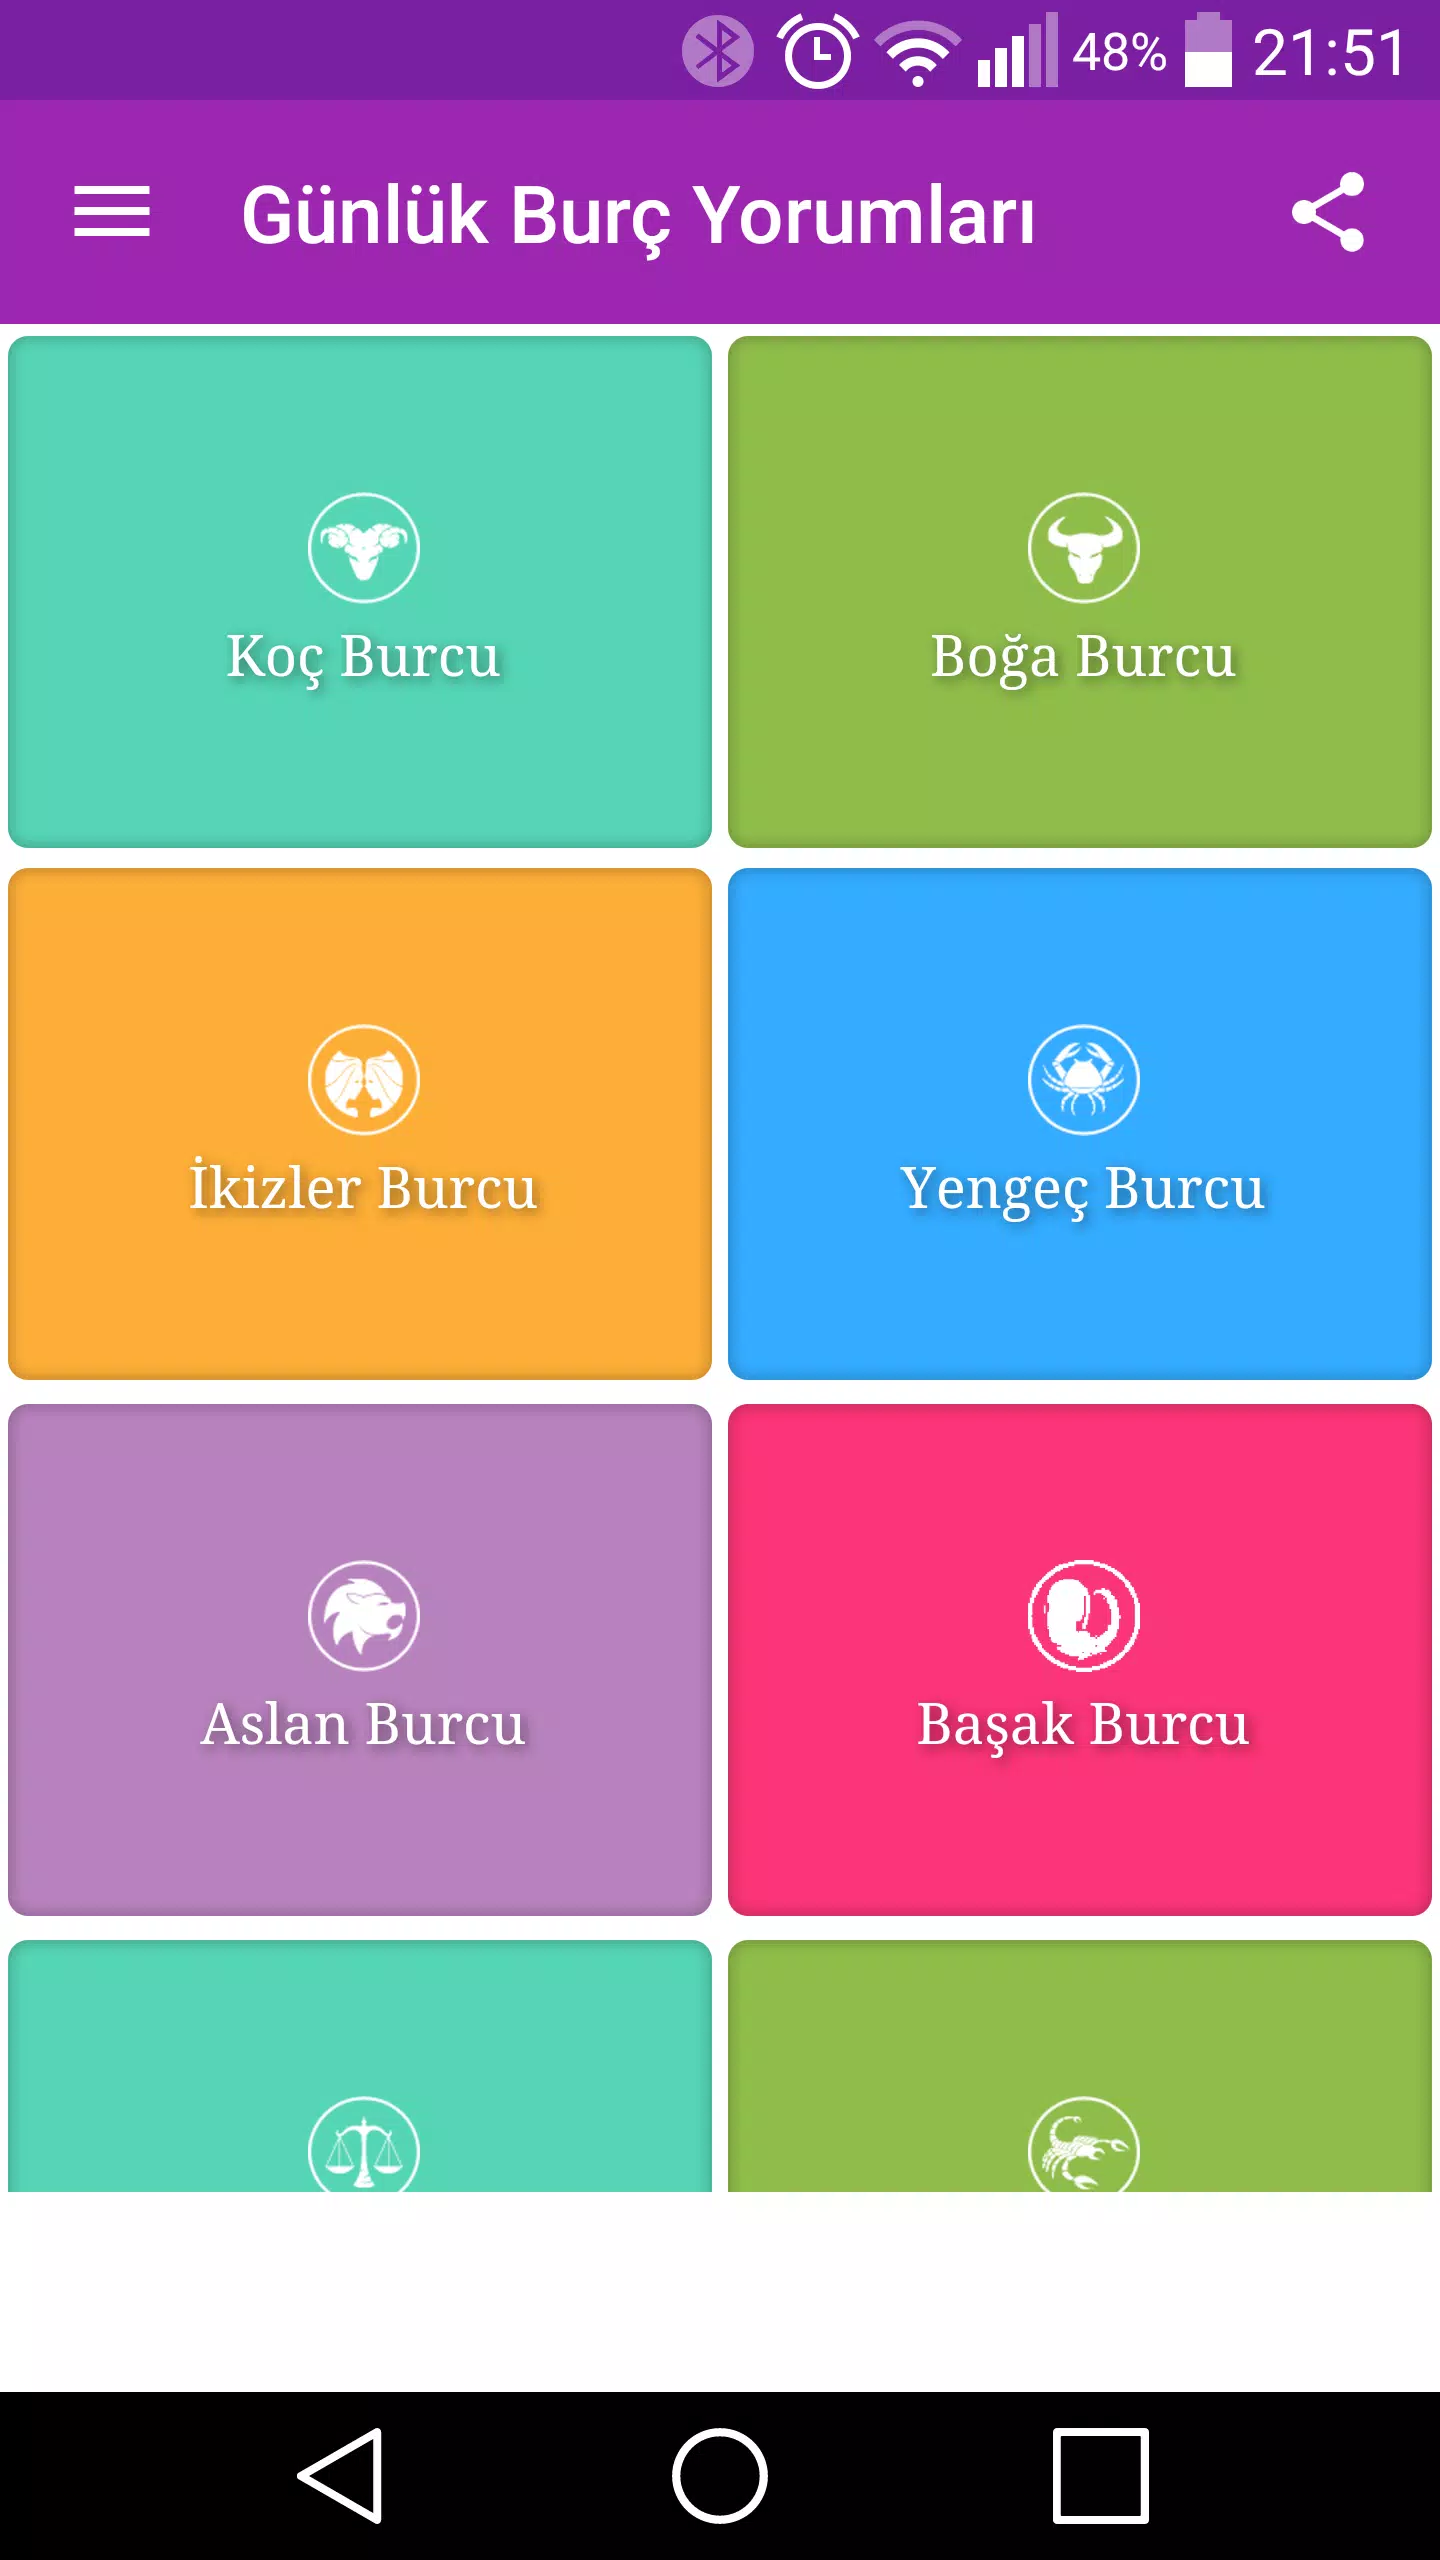 Скачать Günlük Burç Yorumları APK для Android